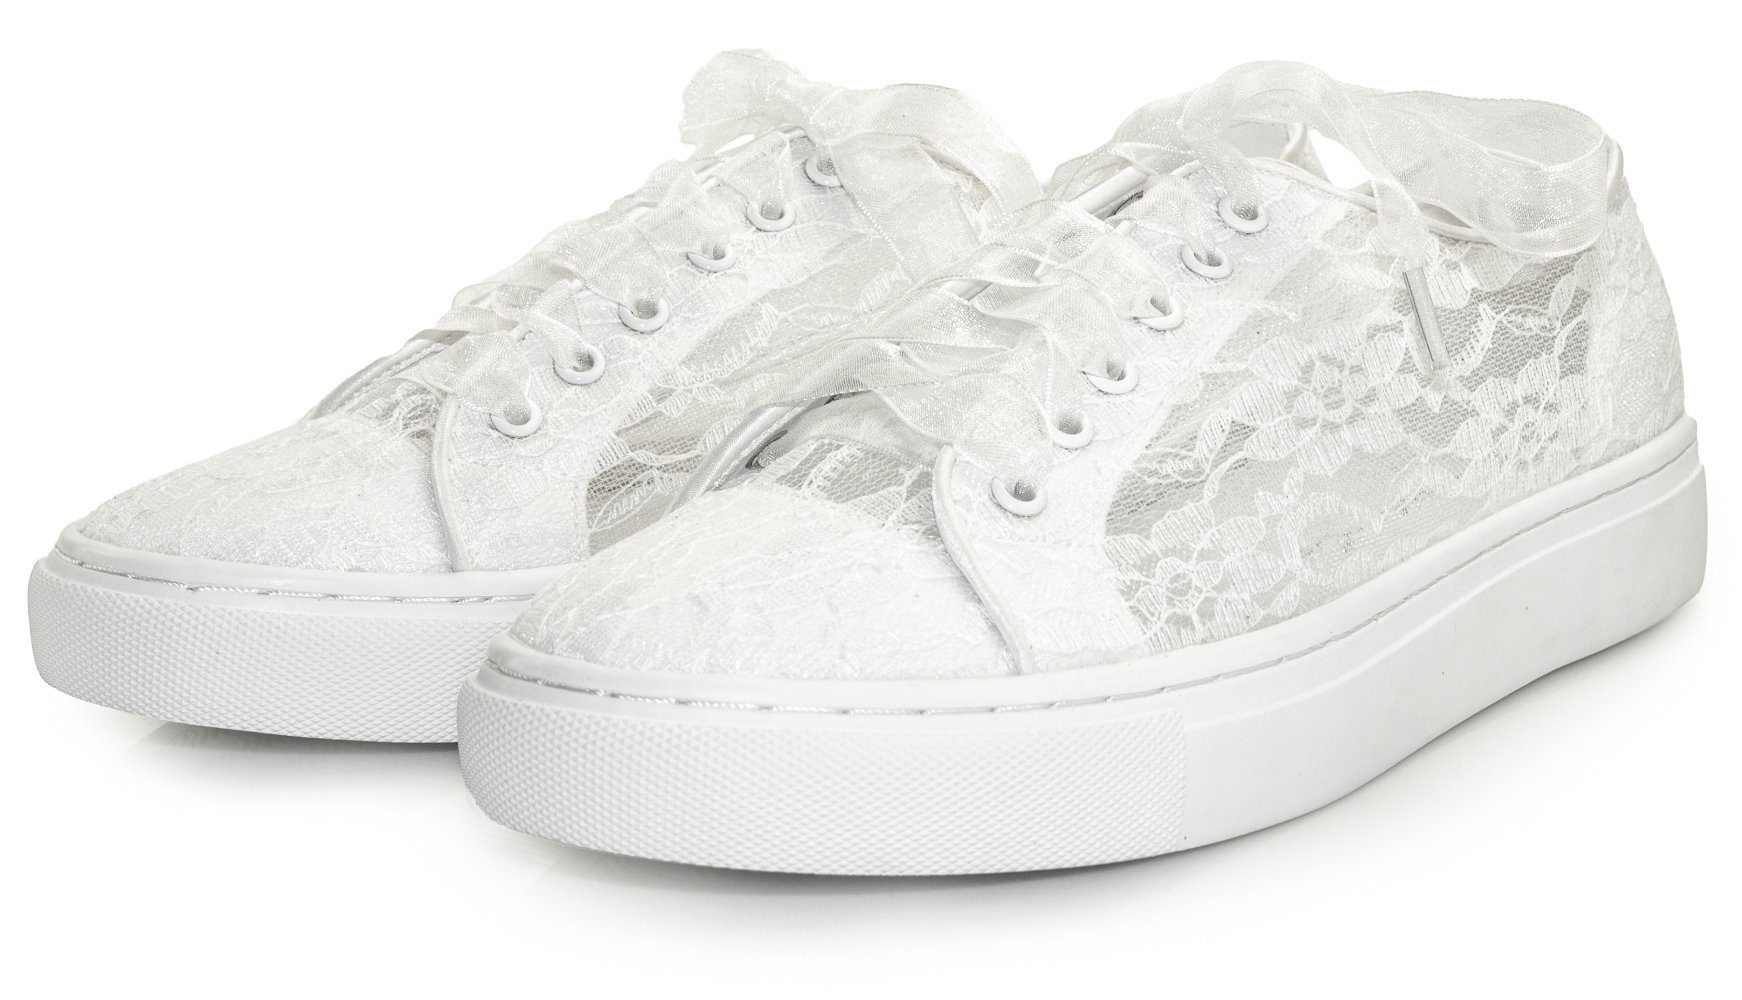 White Lady »937 ivory-spitze« Sneaker online kaufen | OTTO